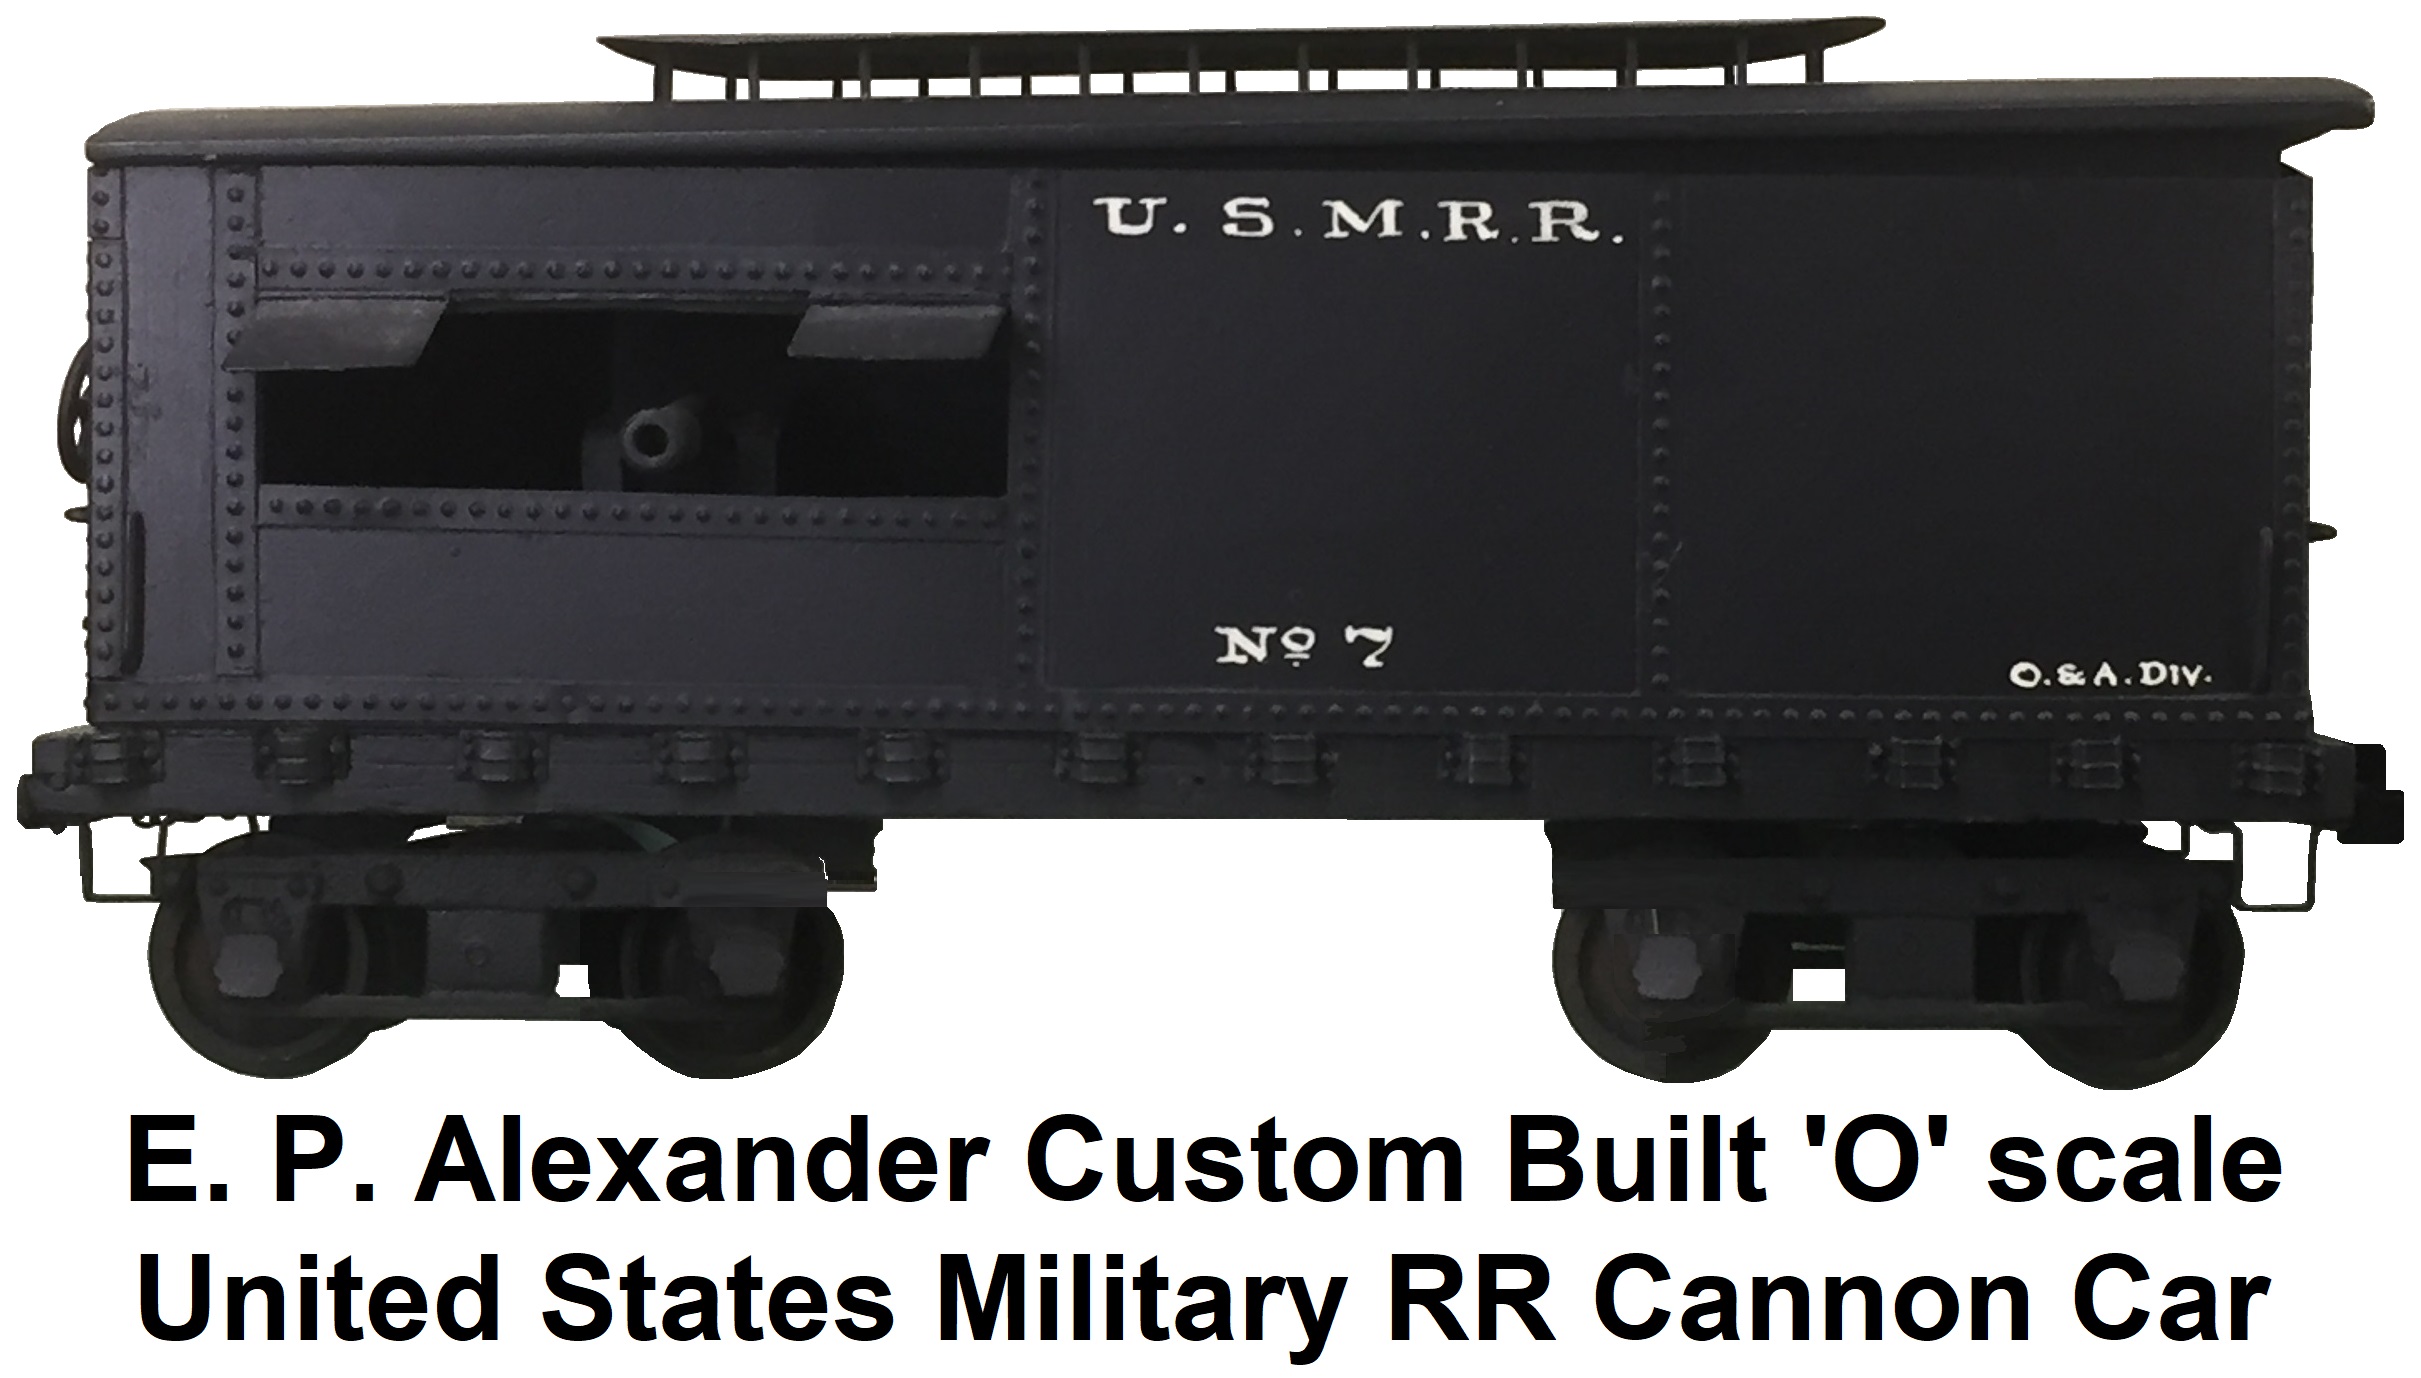 E. P. Alexander custom built 'O' scale U.S.M.R.R. armoured cannon car